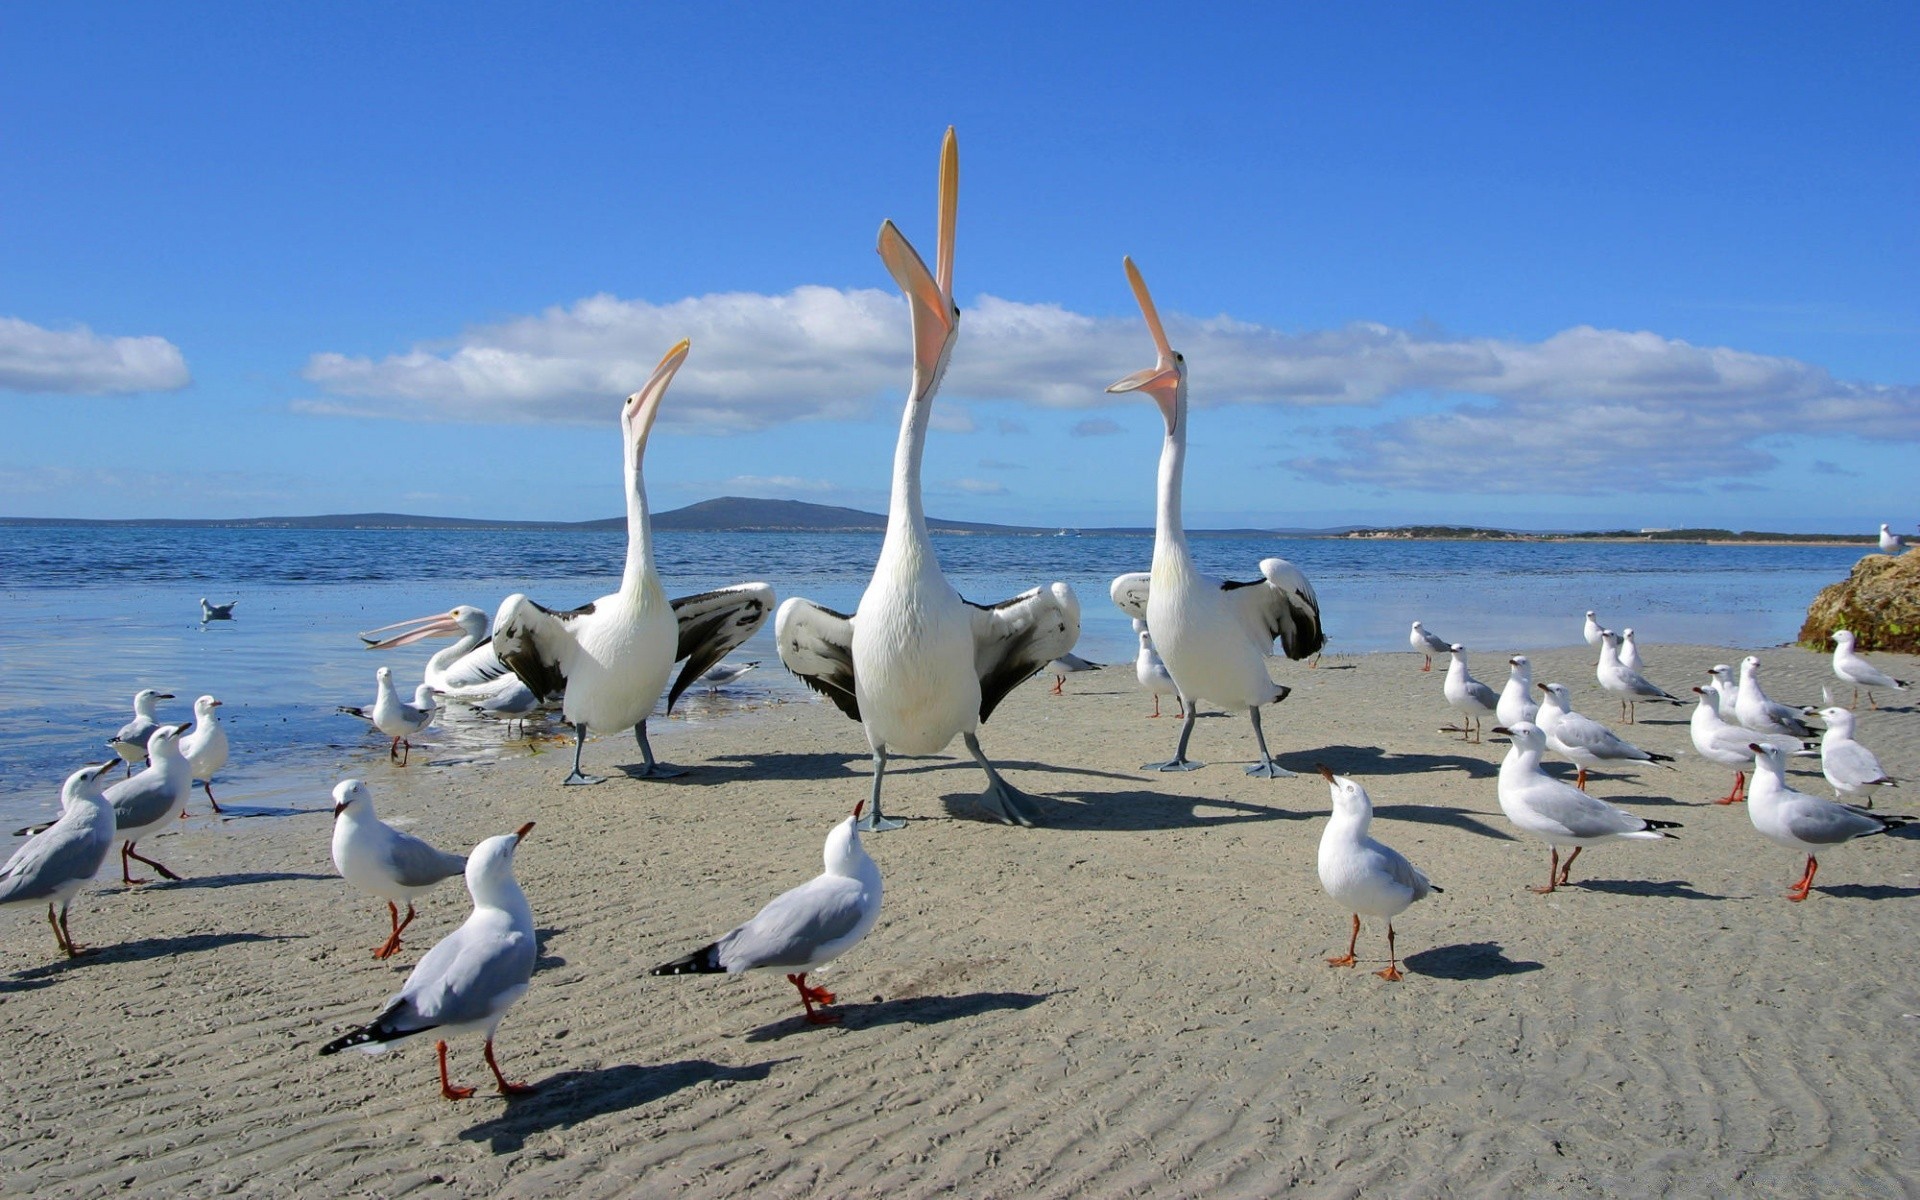 waterfowl seagulls bird water beach sea ocean seashore summer sky sand nature travel flight shore barren